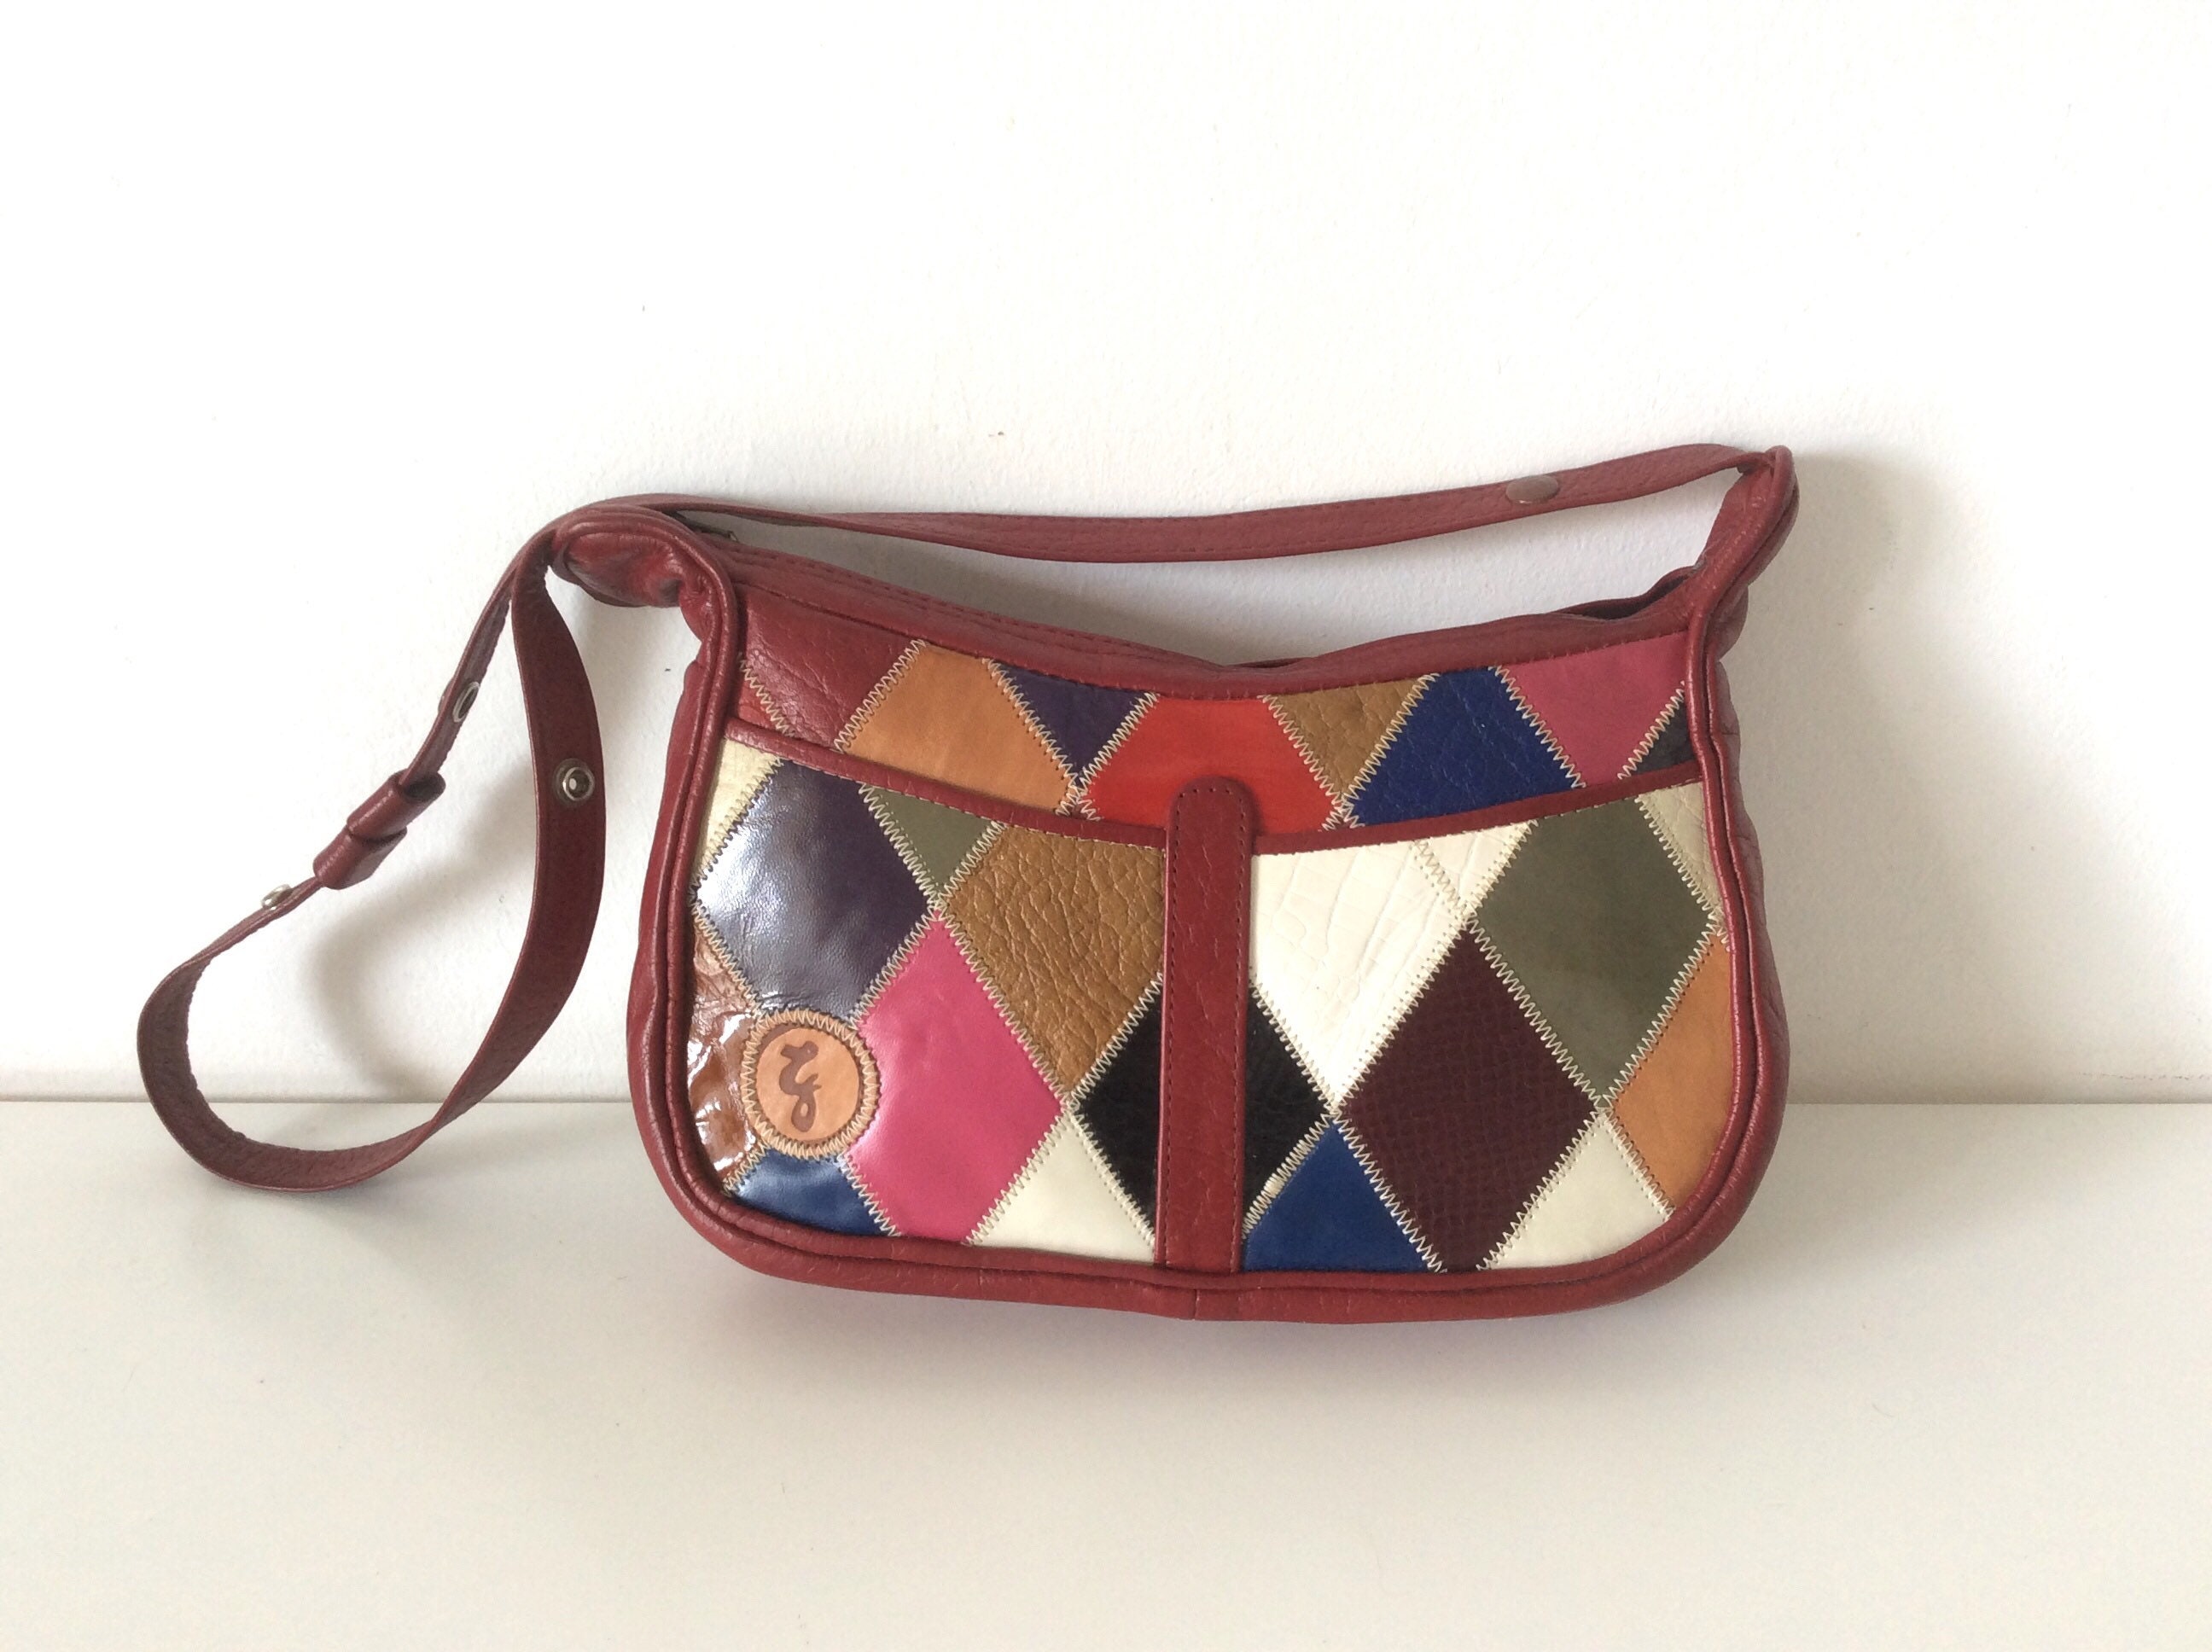 Designer Leather Puzzle Handbag Genuine Leather Curved Shoulder Bag With  Contrast Color, Patchwork Pattern, And Letter Detail From Posh66, $98.45 |  DHgate.Com